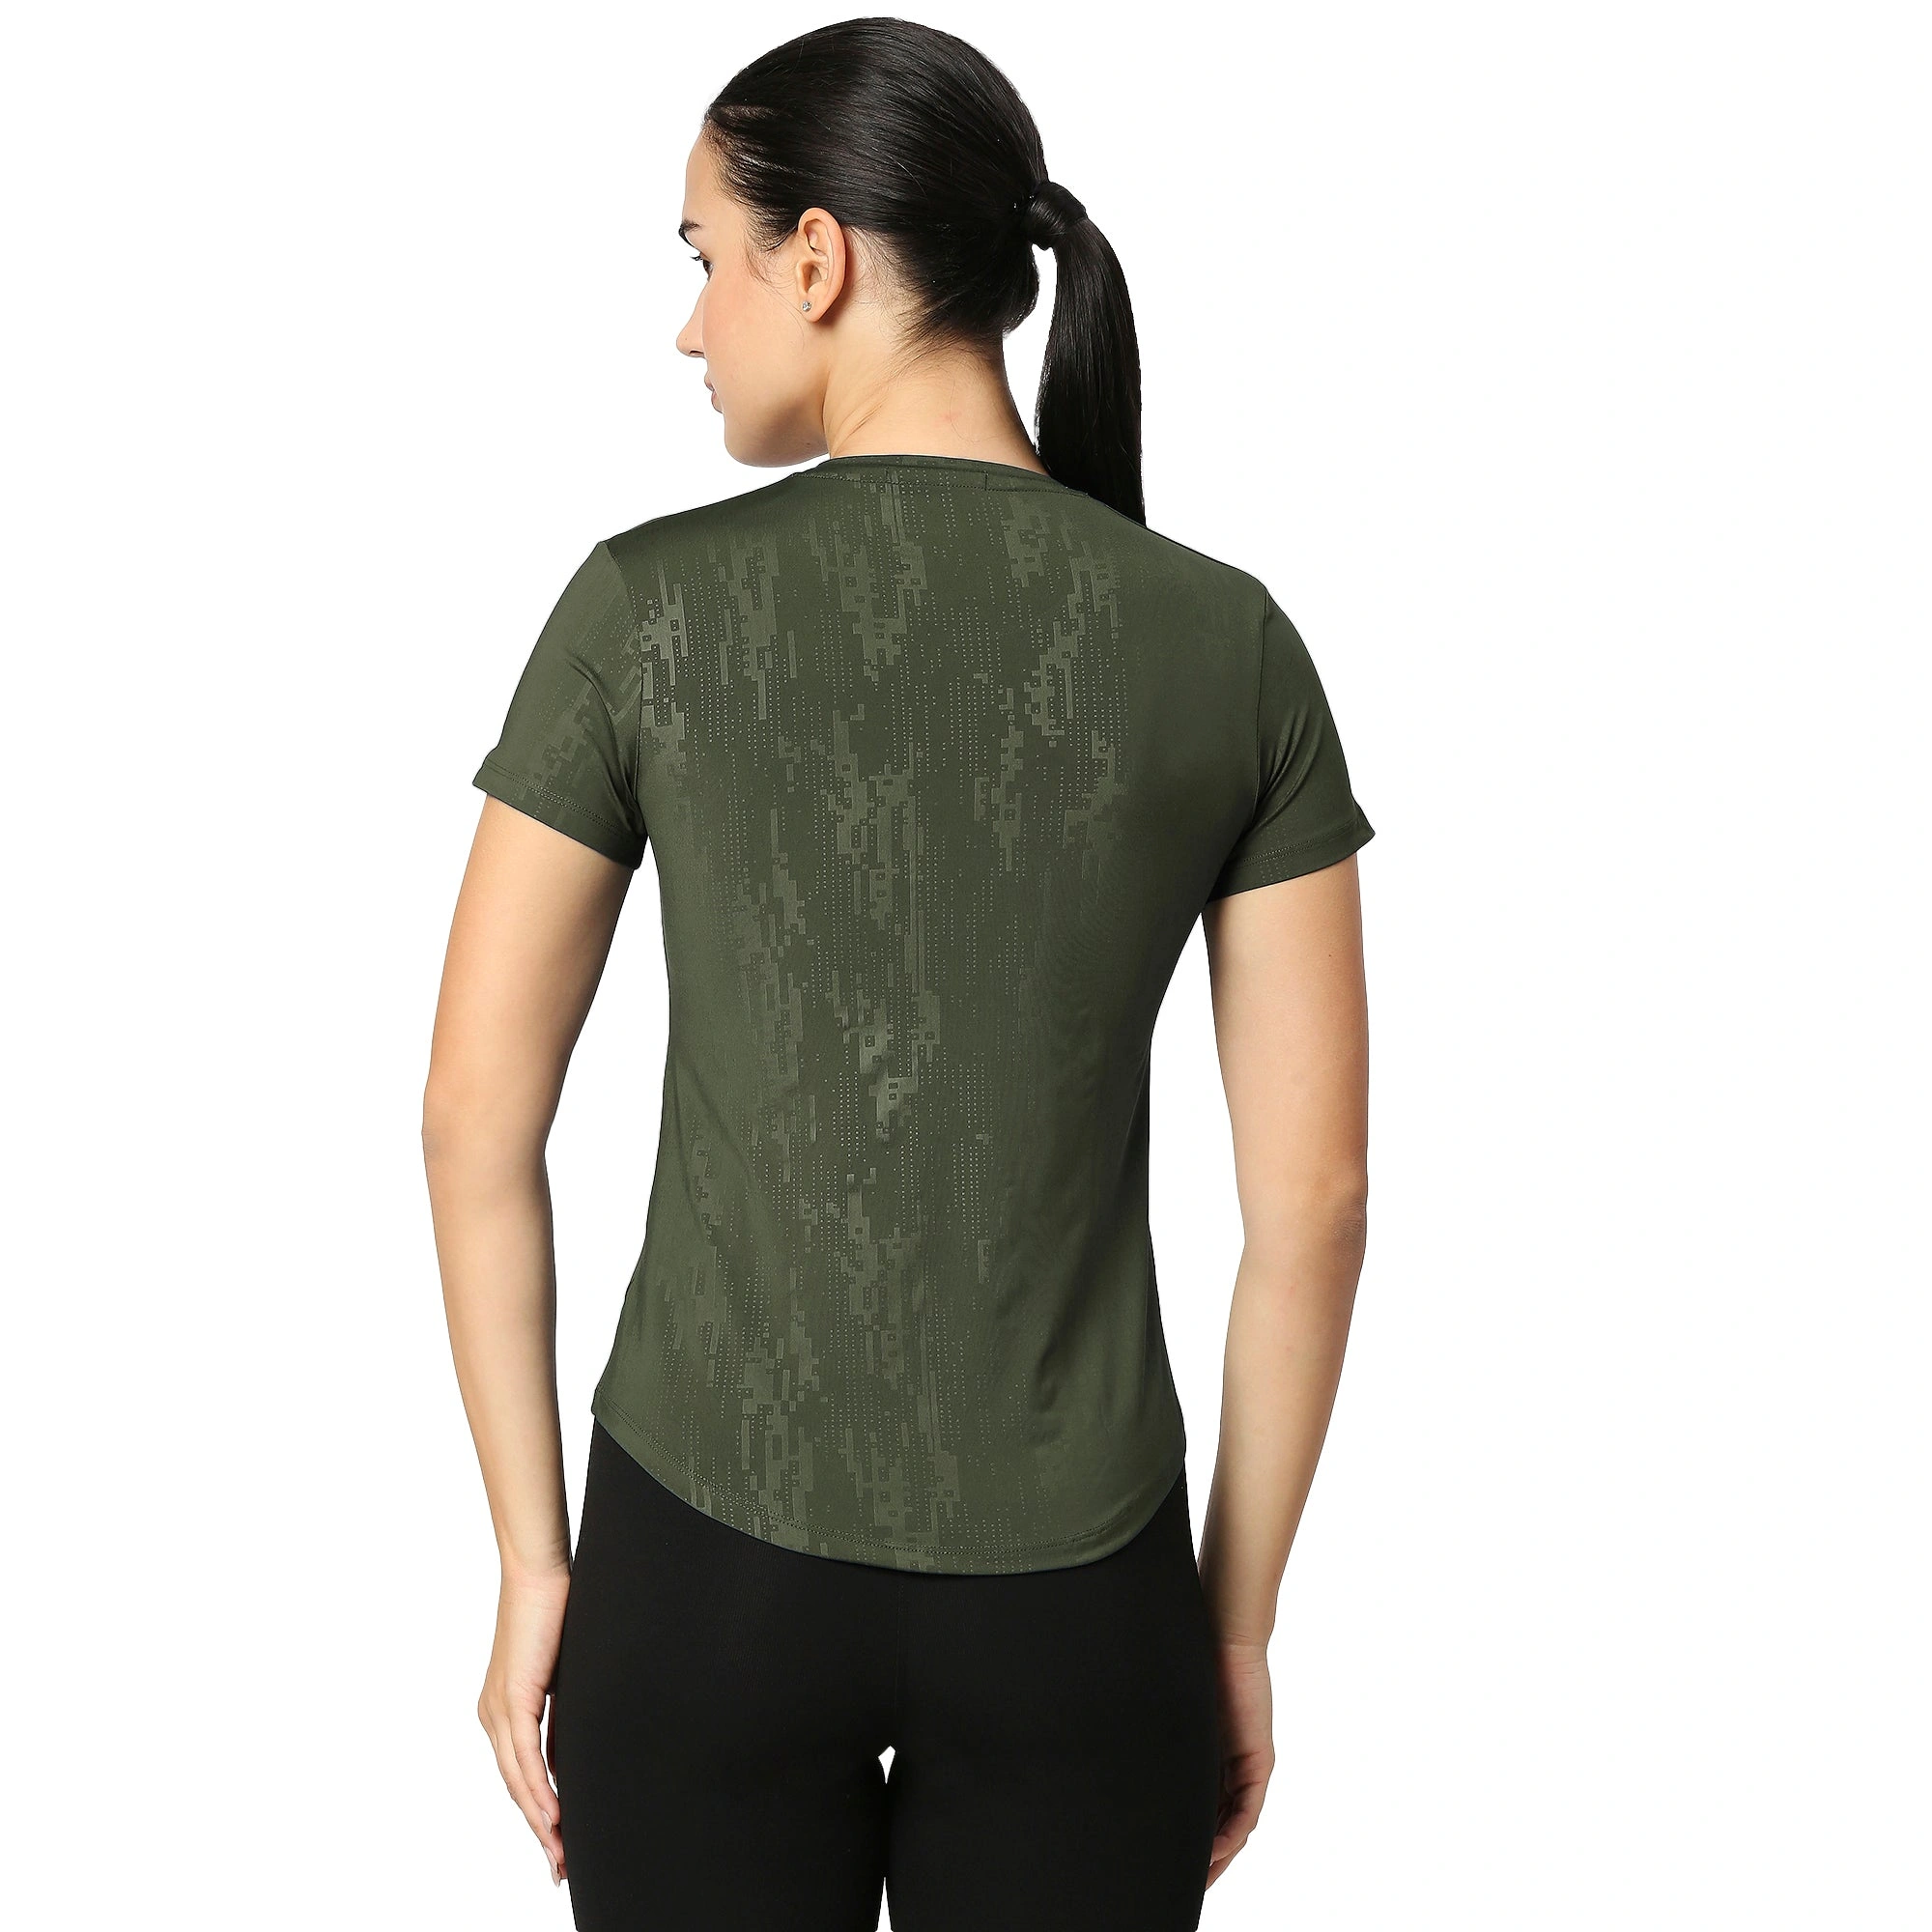 Curved Hem Emboss Print Gym Workout T-Shirt -OLIVE GREEN-XL-3